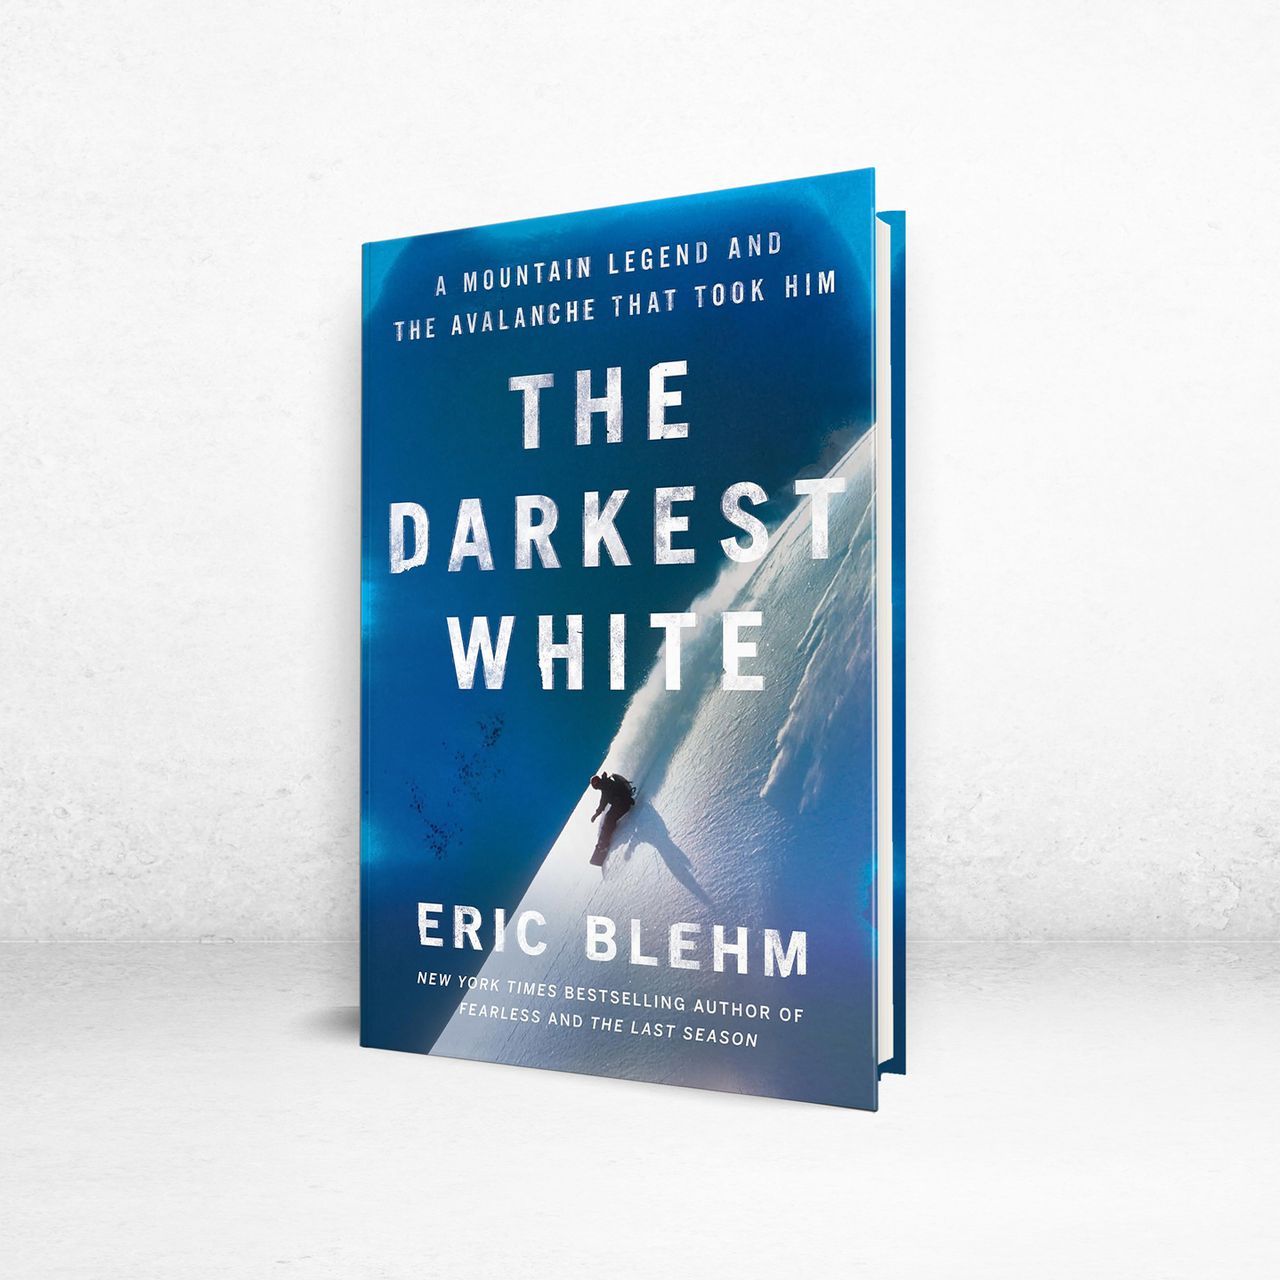 The Darkest White by Eric Blehm. Photo Credit: WSJ